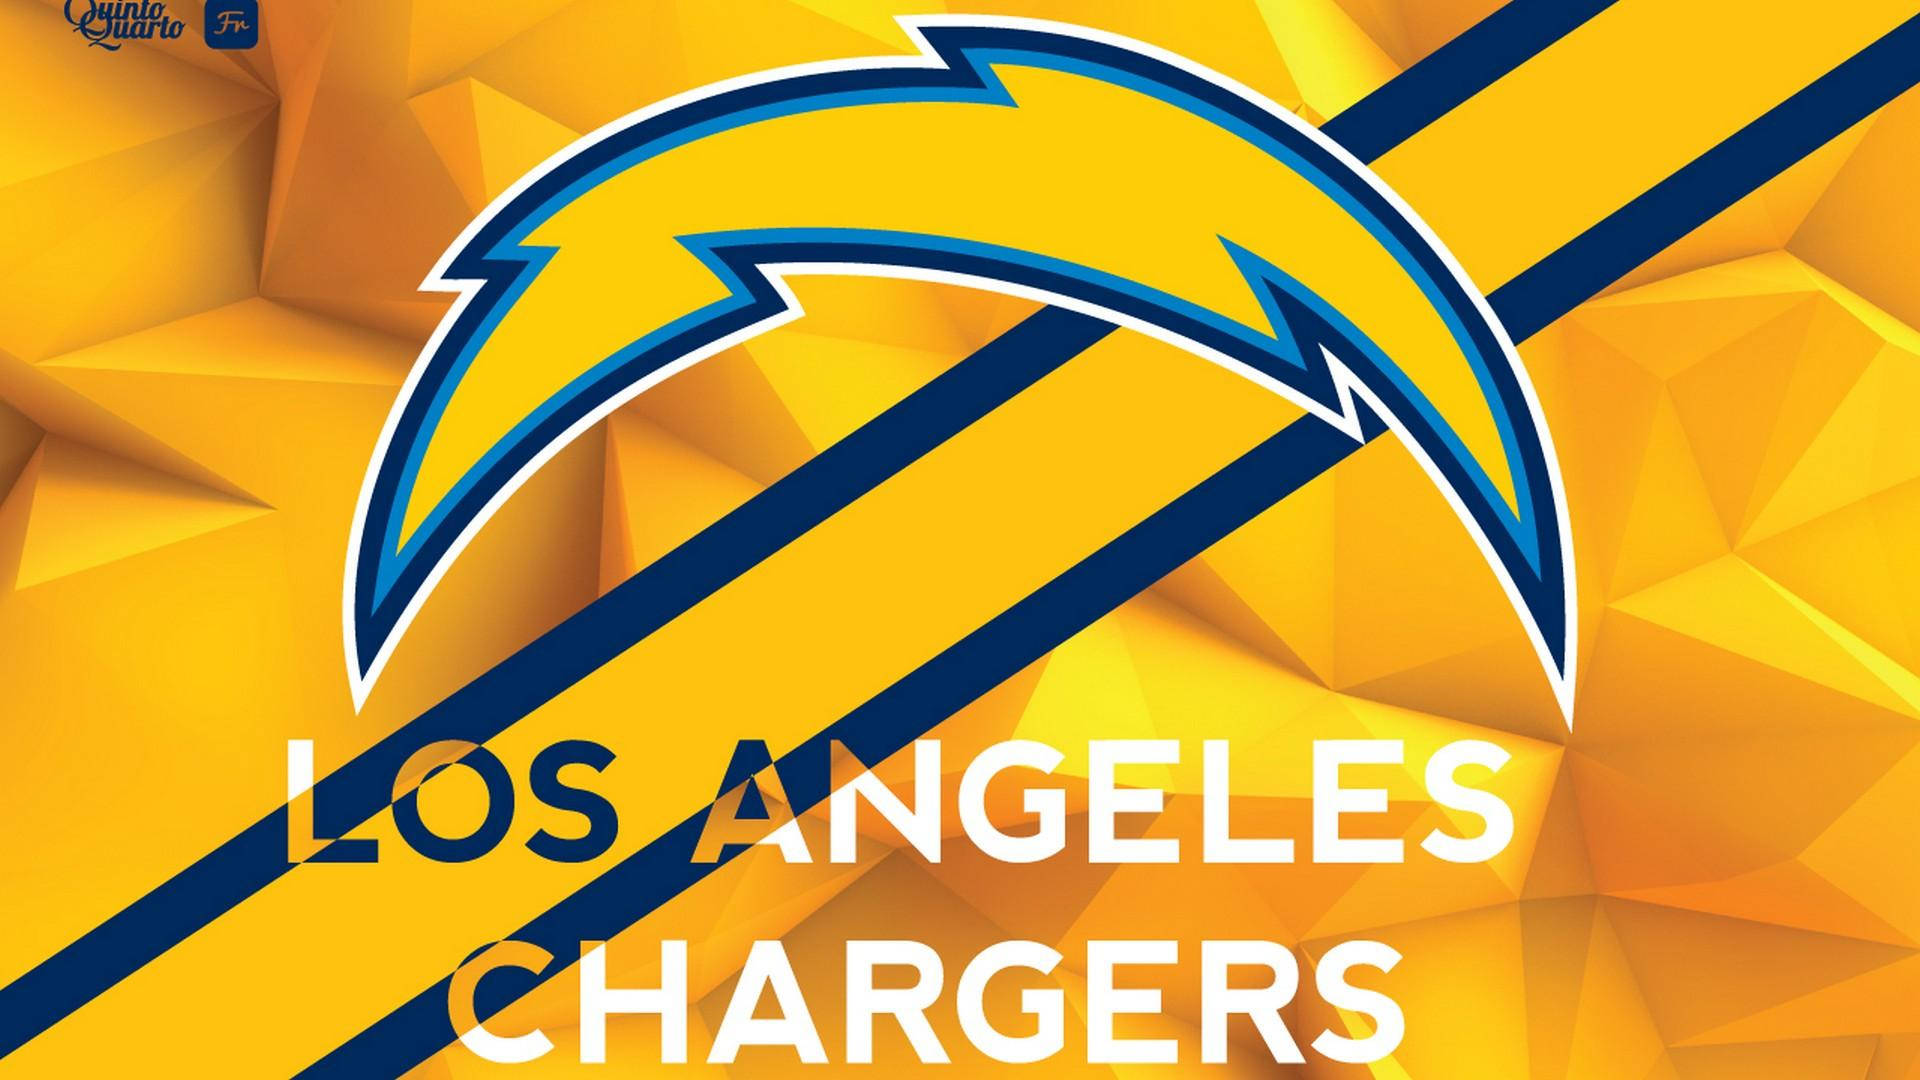 Losangeles Chargers Logo Amarillo. Fondo de pantalla